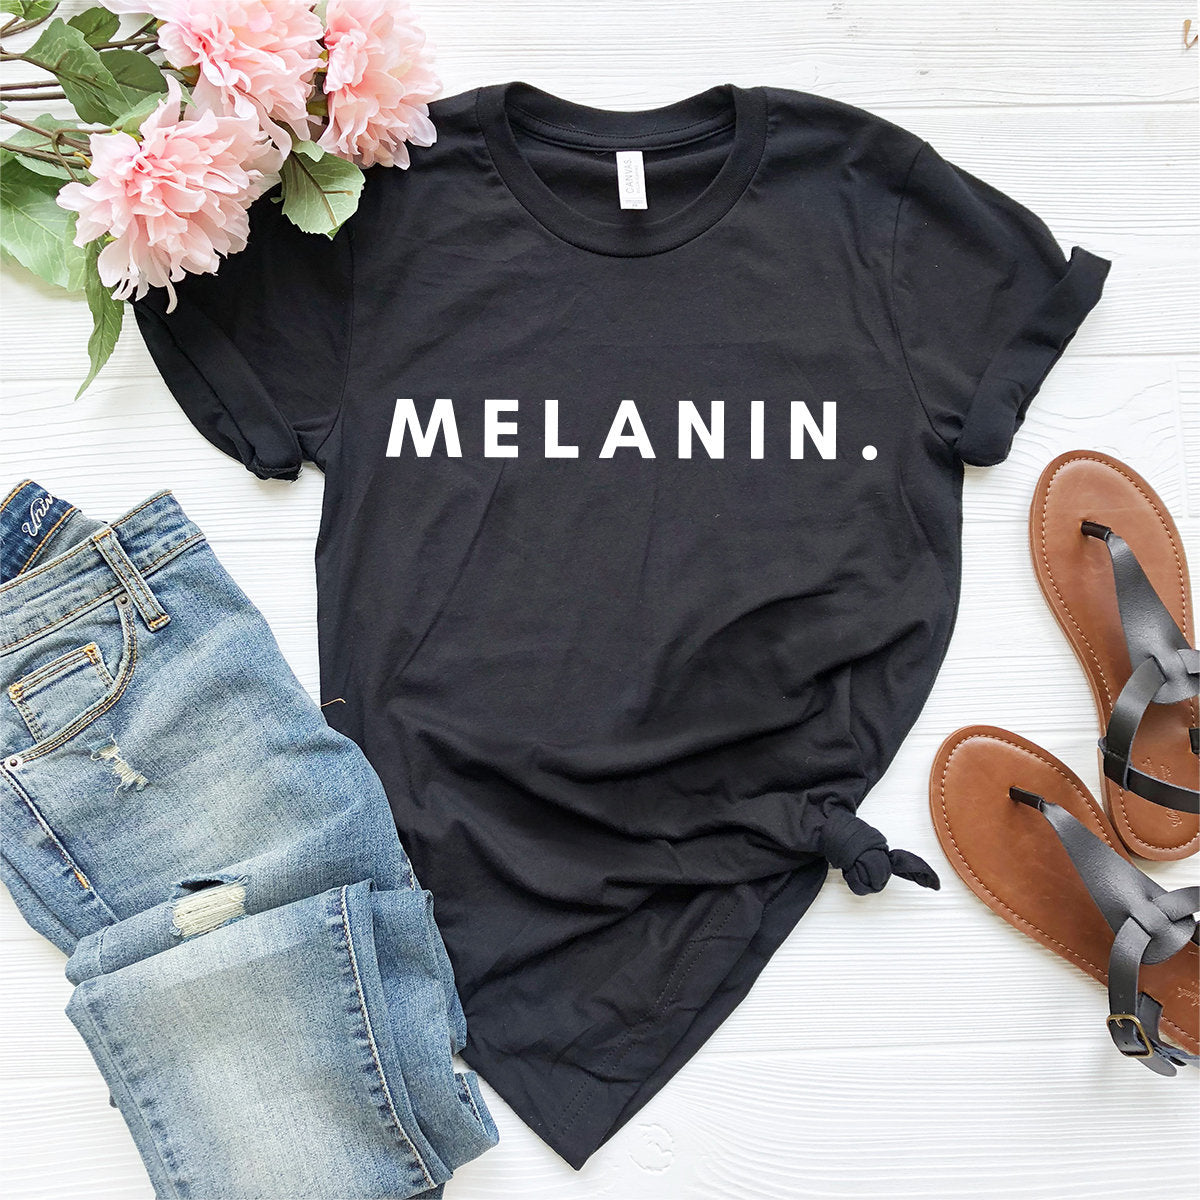 Melanin T-Shirt, Shades Of Black Shirt, Black Love Shirt, Black Pride Shirt, Black Power Shirt, Black History Tee, Afrocentric Shirt - Fastdeliverytees.com